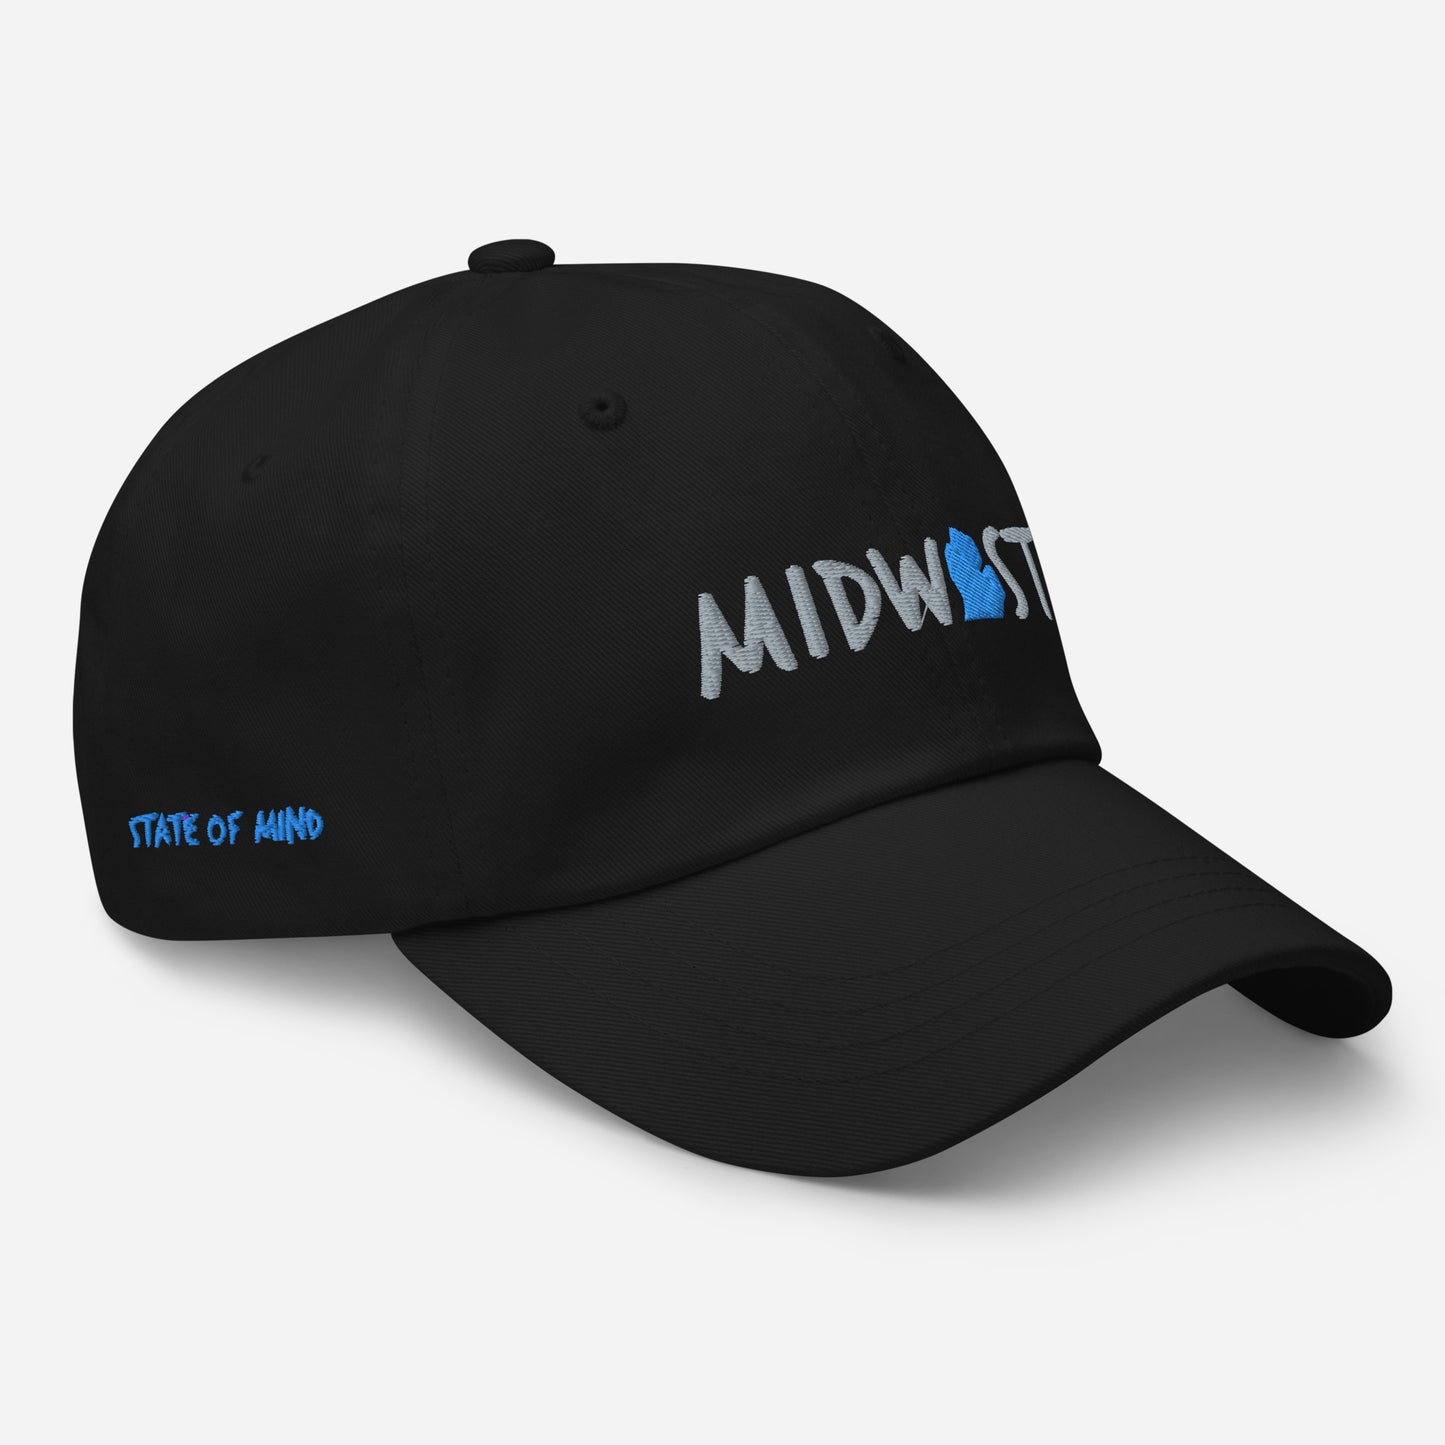 Michigan Midwest™ Lookin' Sharp hat